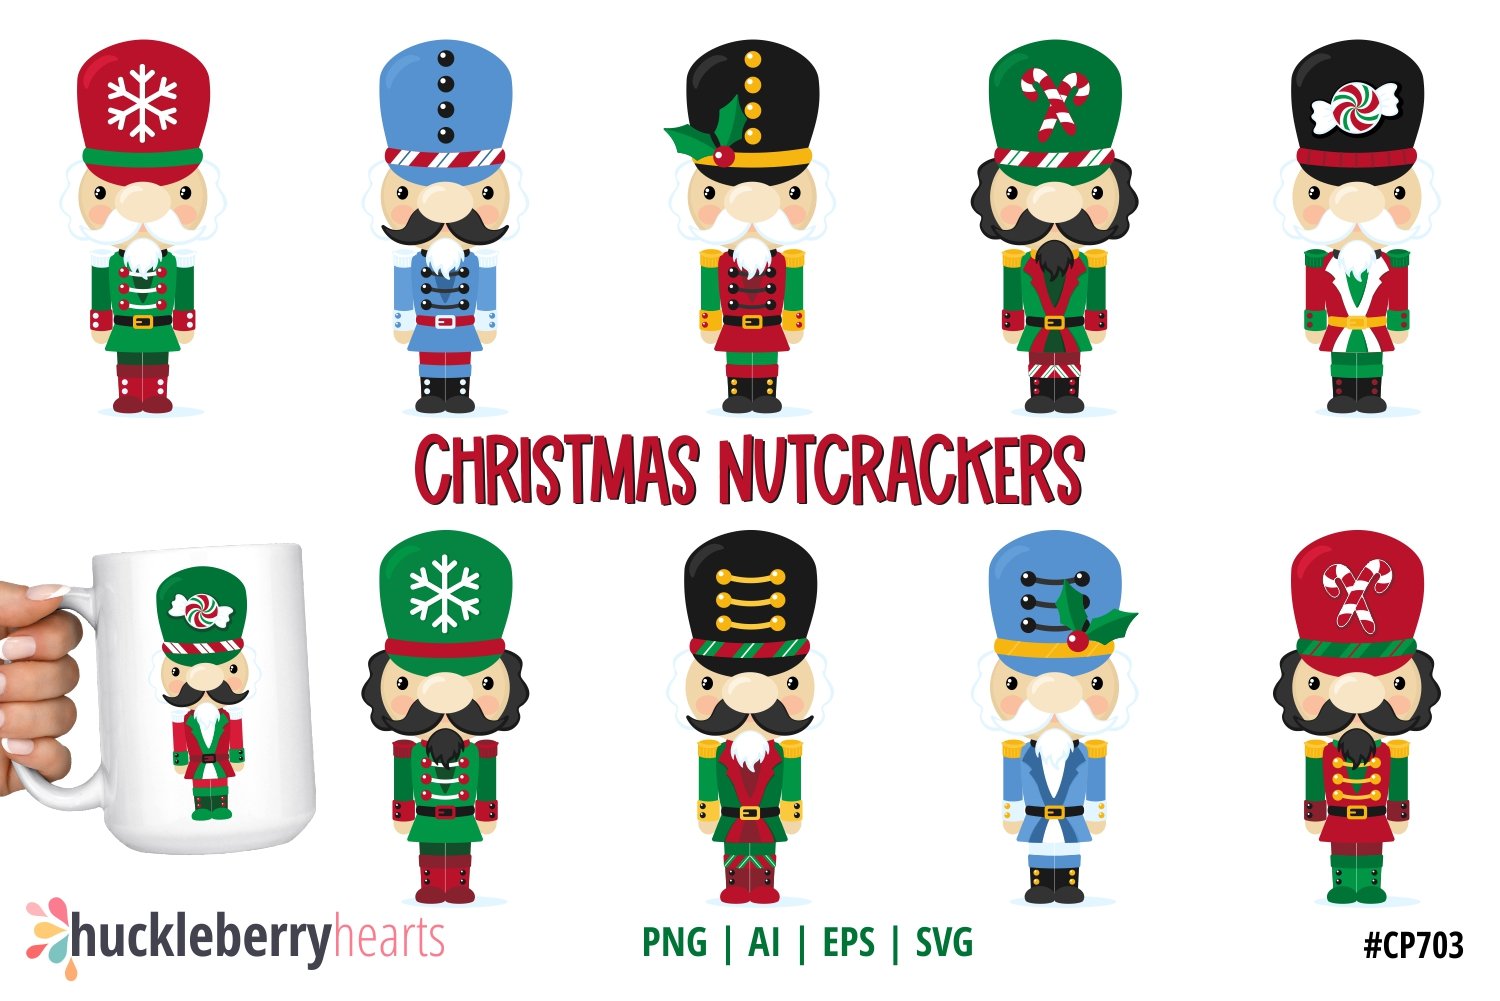 Christmas Nutcrackers cover image.